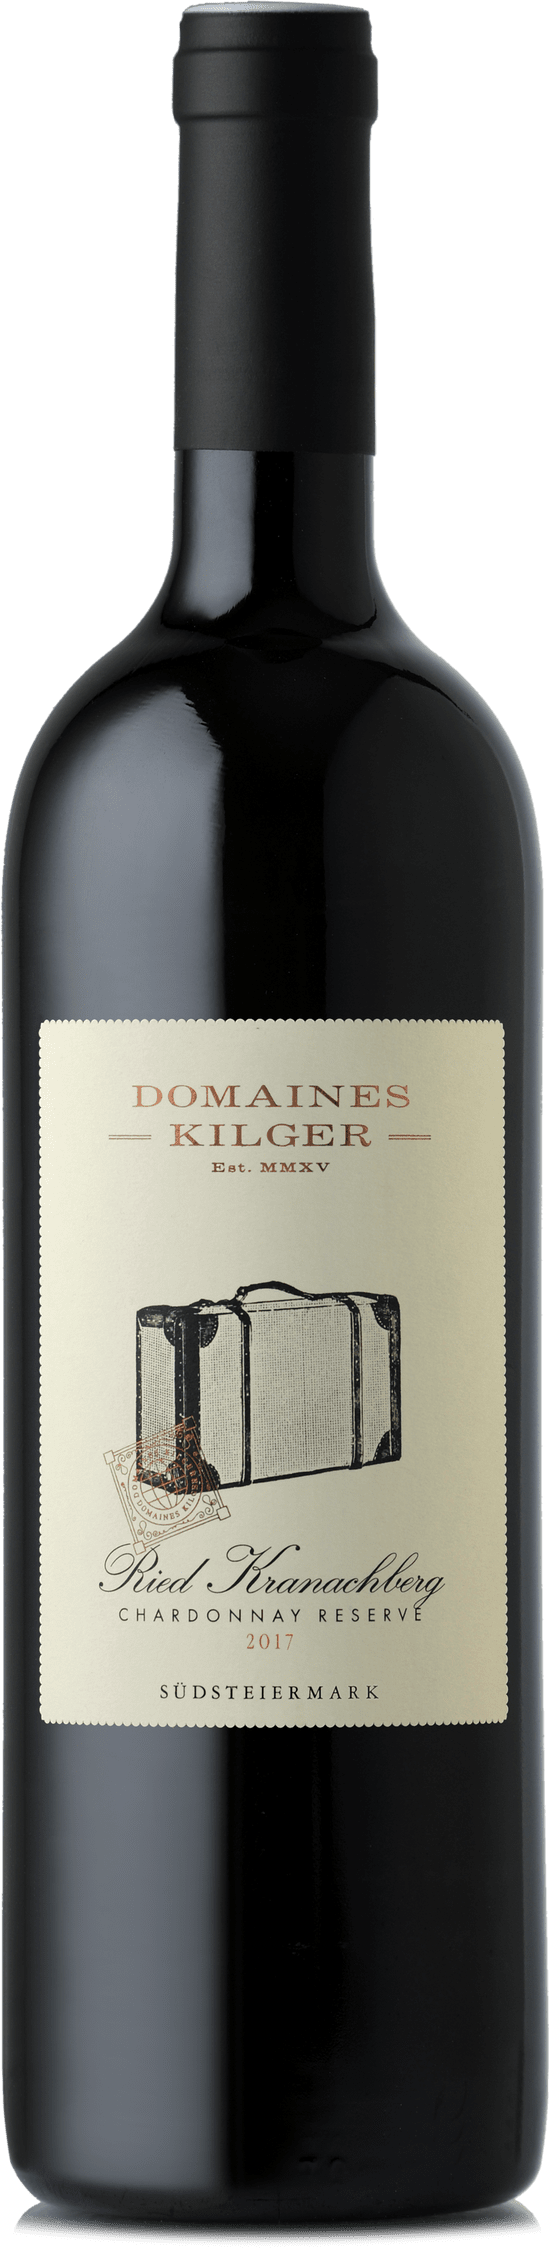 2017 Magnum Chardonnay Ried KRANACHBERG Reserve DAC